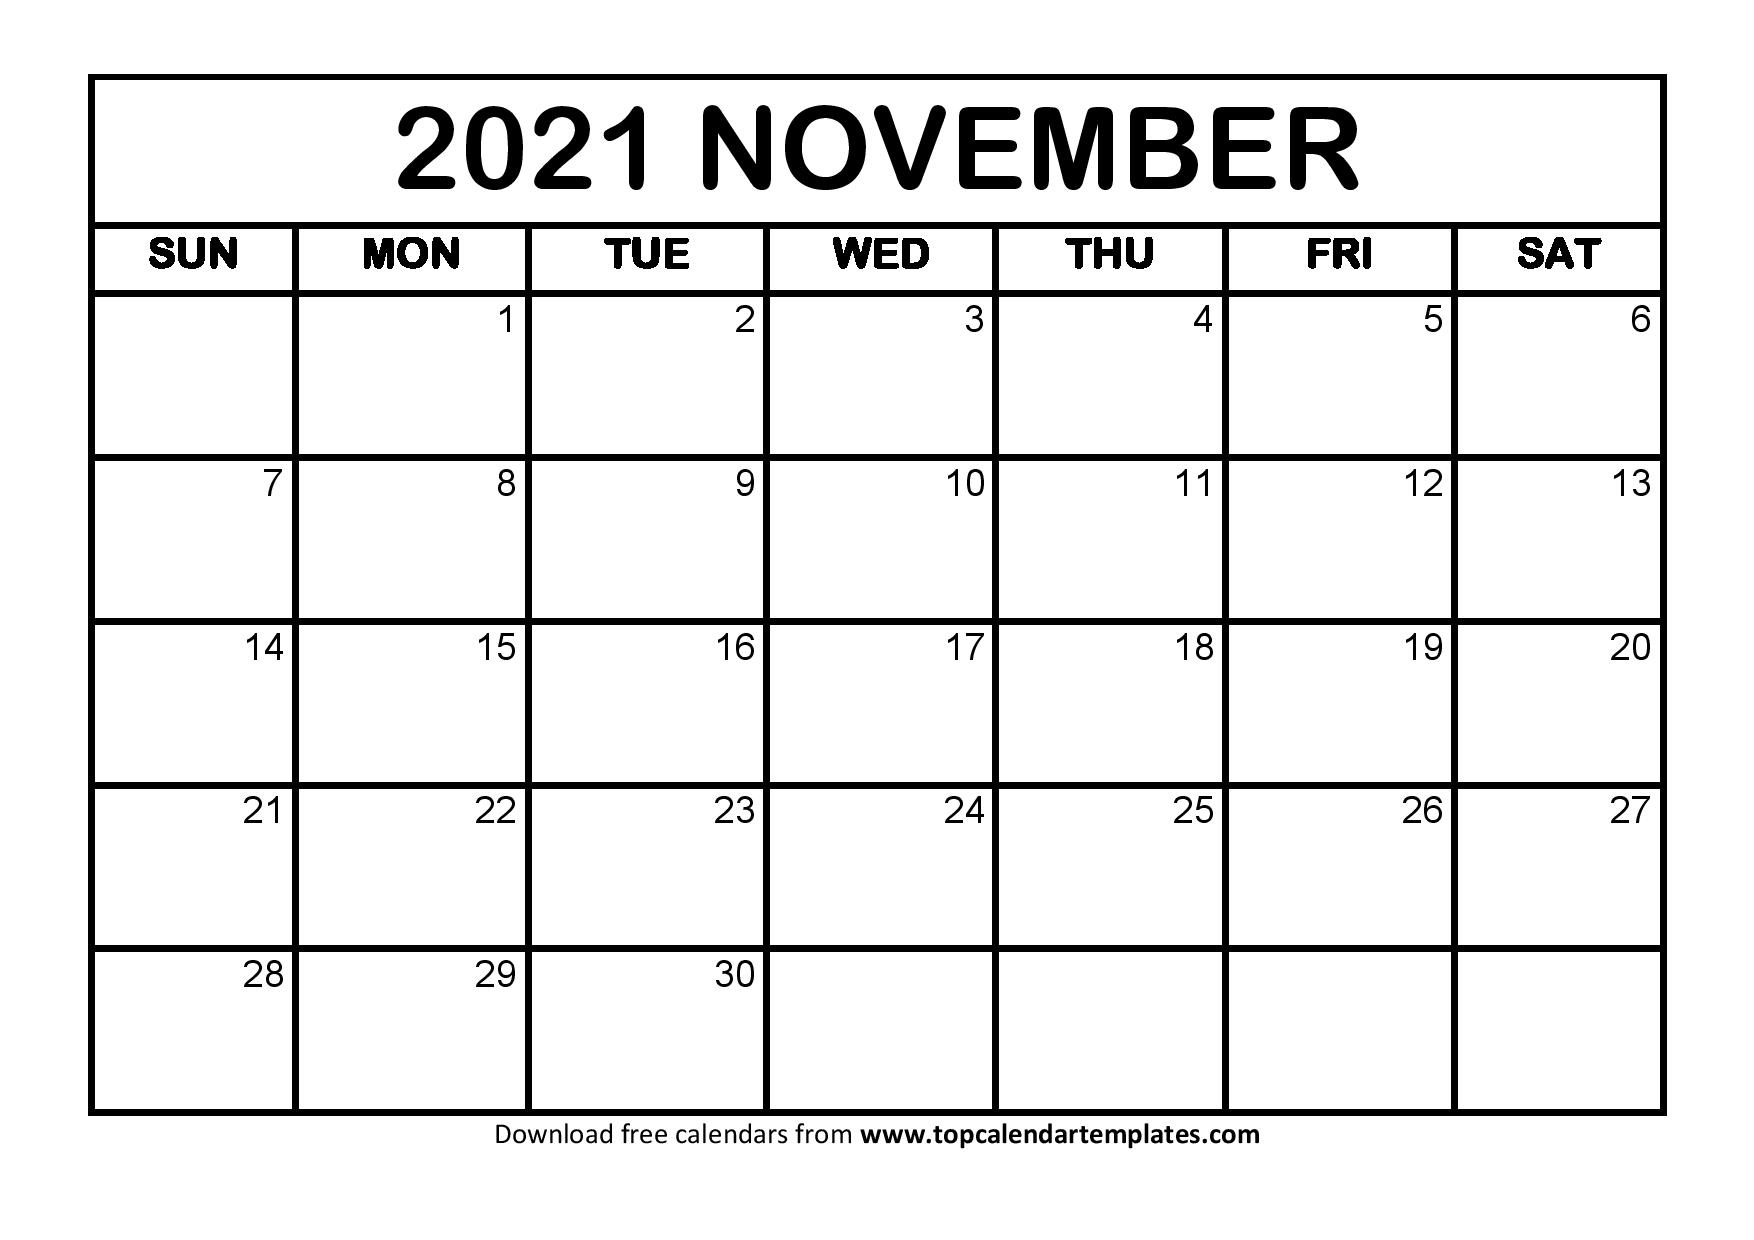 November 2021 Printable Calendar In Pdf Format November 2021 Calendar Thanksgiving